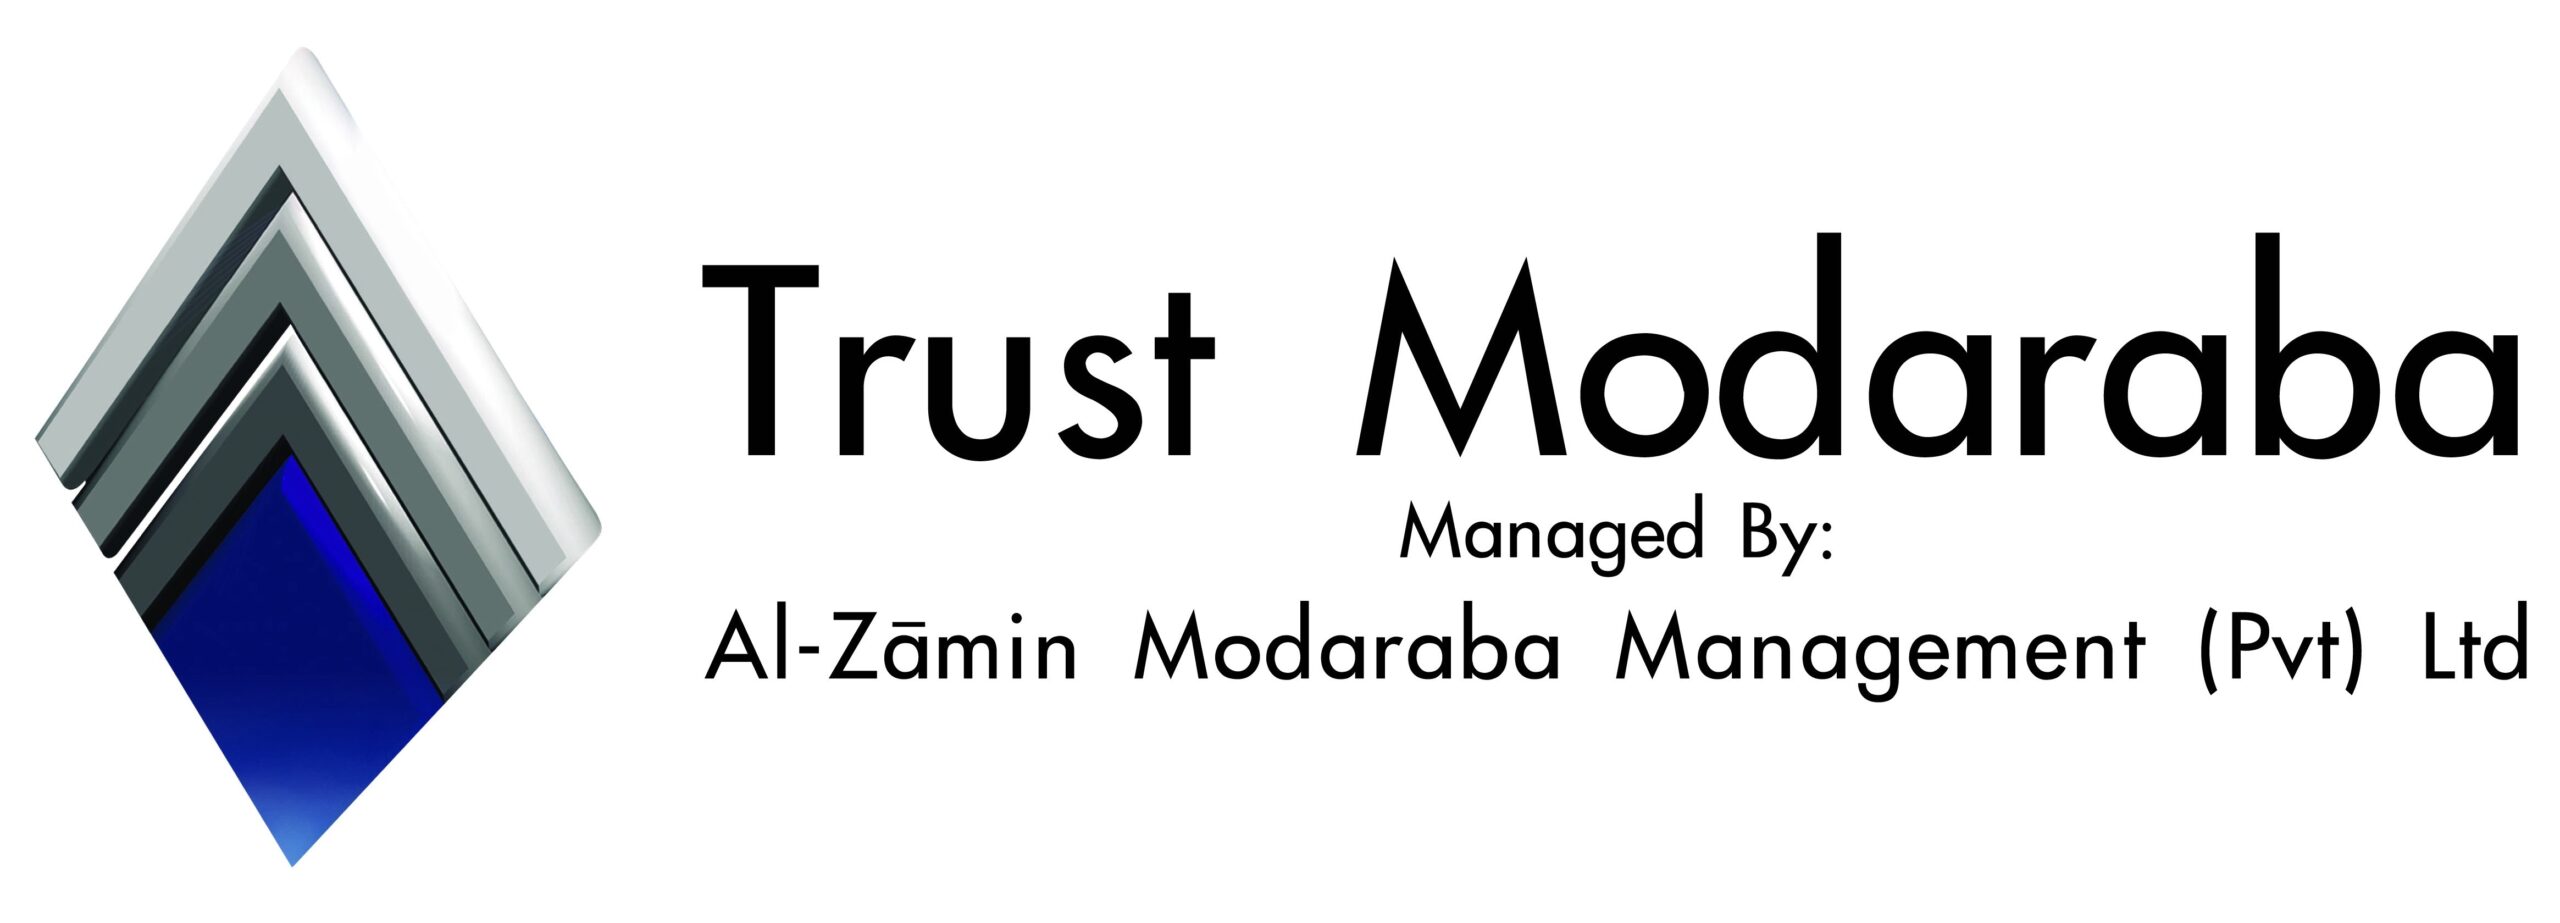 Trust Modaraba